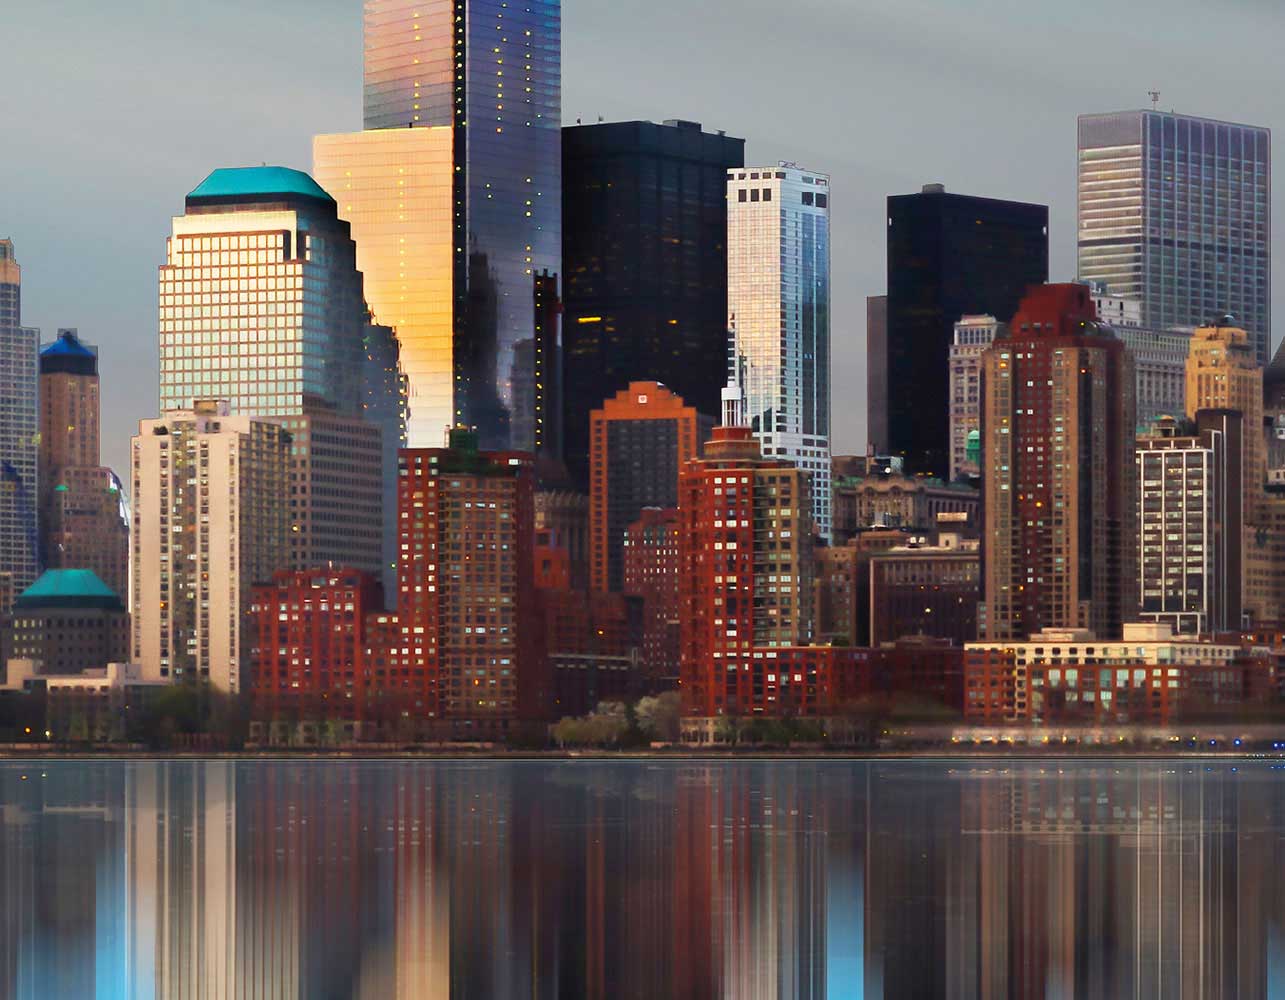 Fototapete kaufen online New York WTC WG